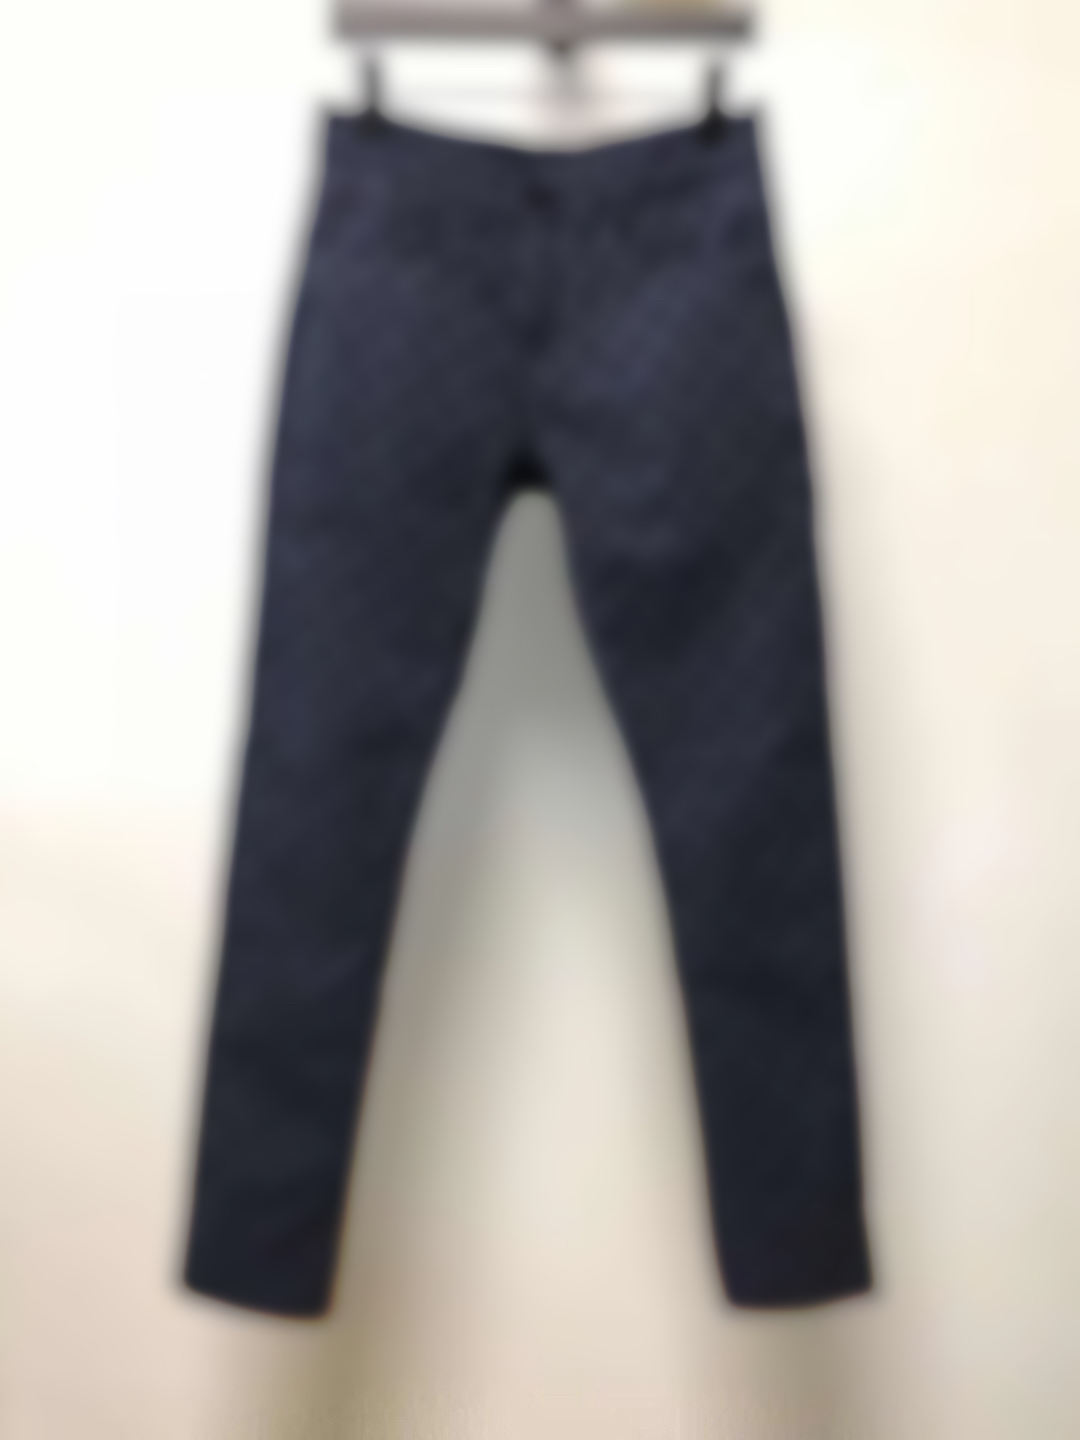 21FW paris italy 3d black blue purple jeans double side Casual Street Fashion Pockets Warm Men Women Couple Outwear free ship L0708